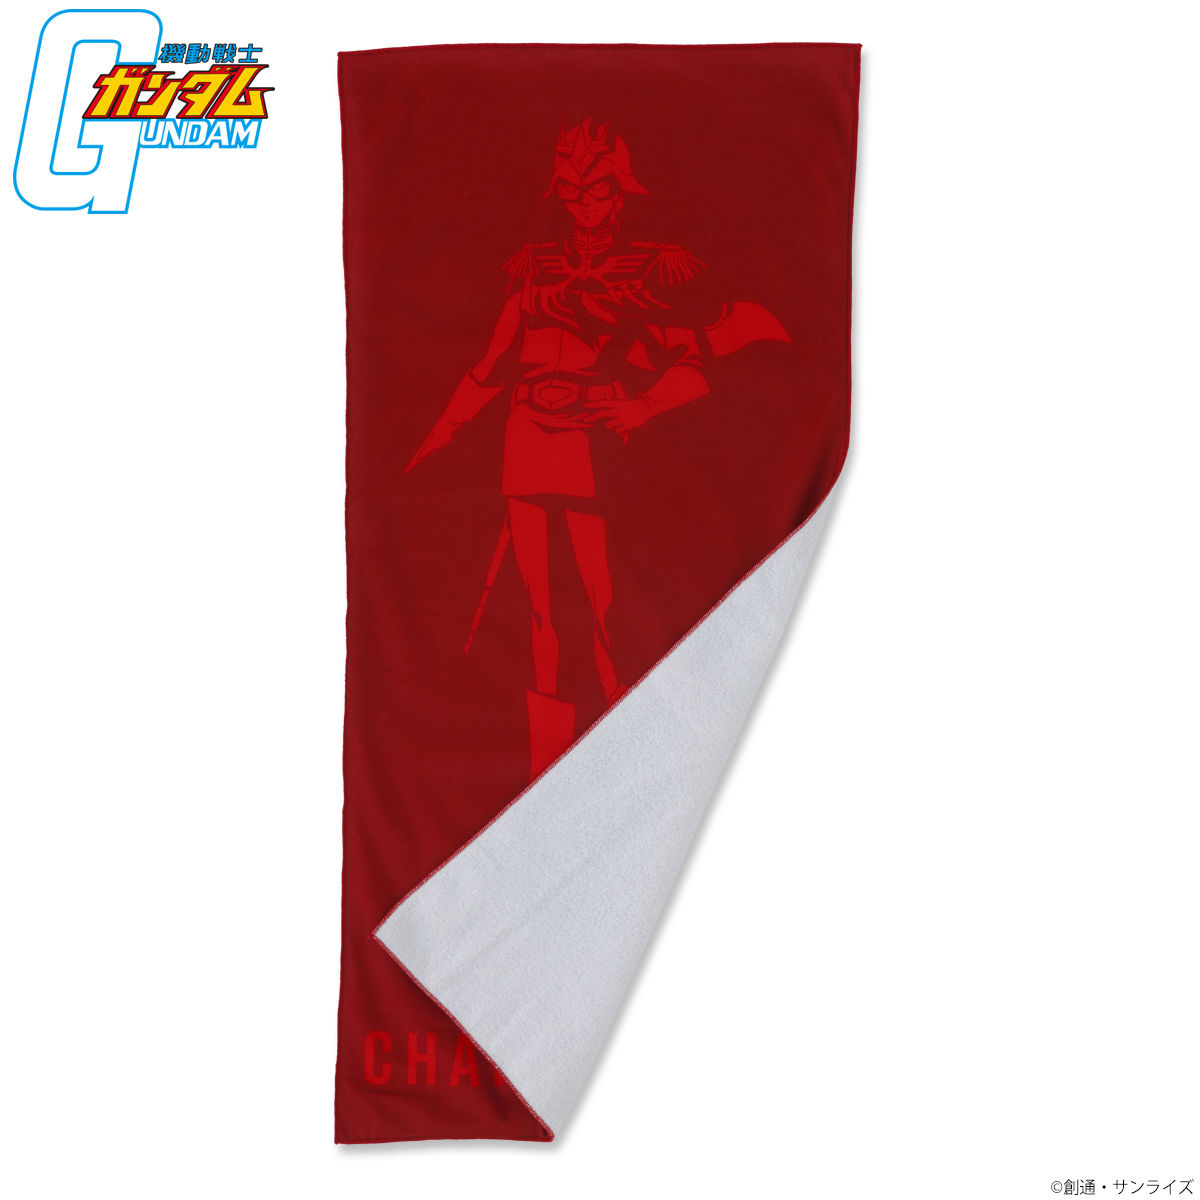 Mobile Suit Gundam RED Series Face Towel